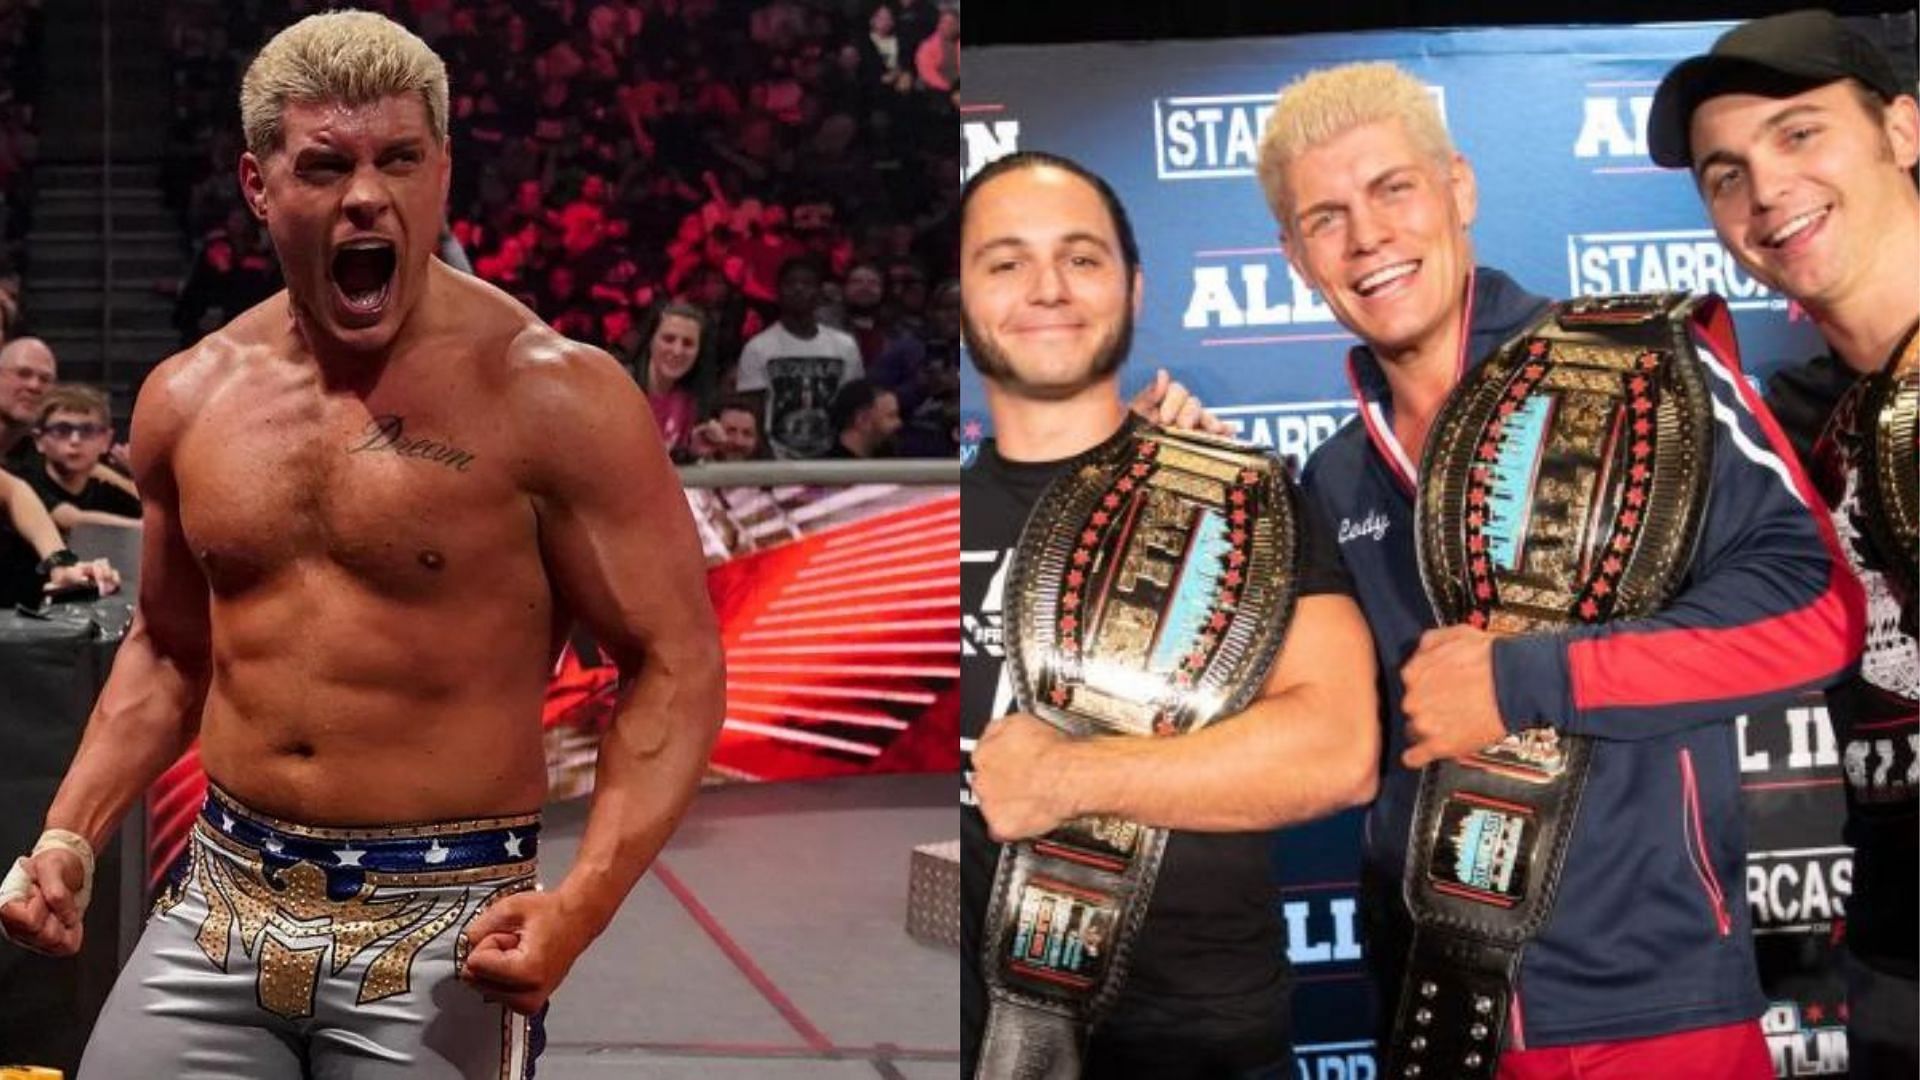 Cody Rhodes left AEW for WWE in 2022